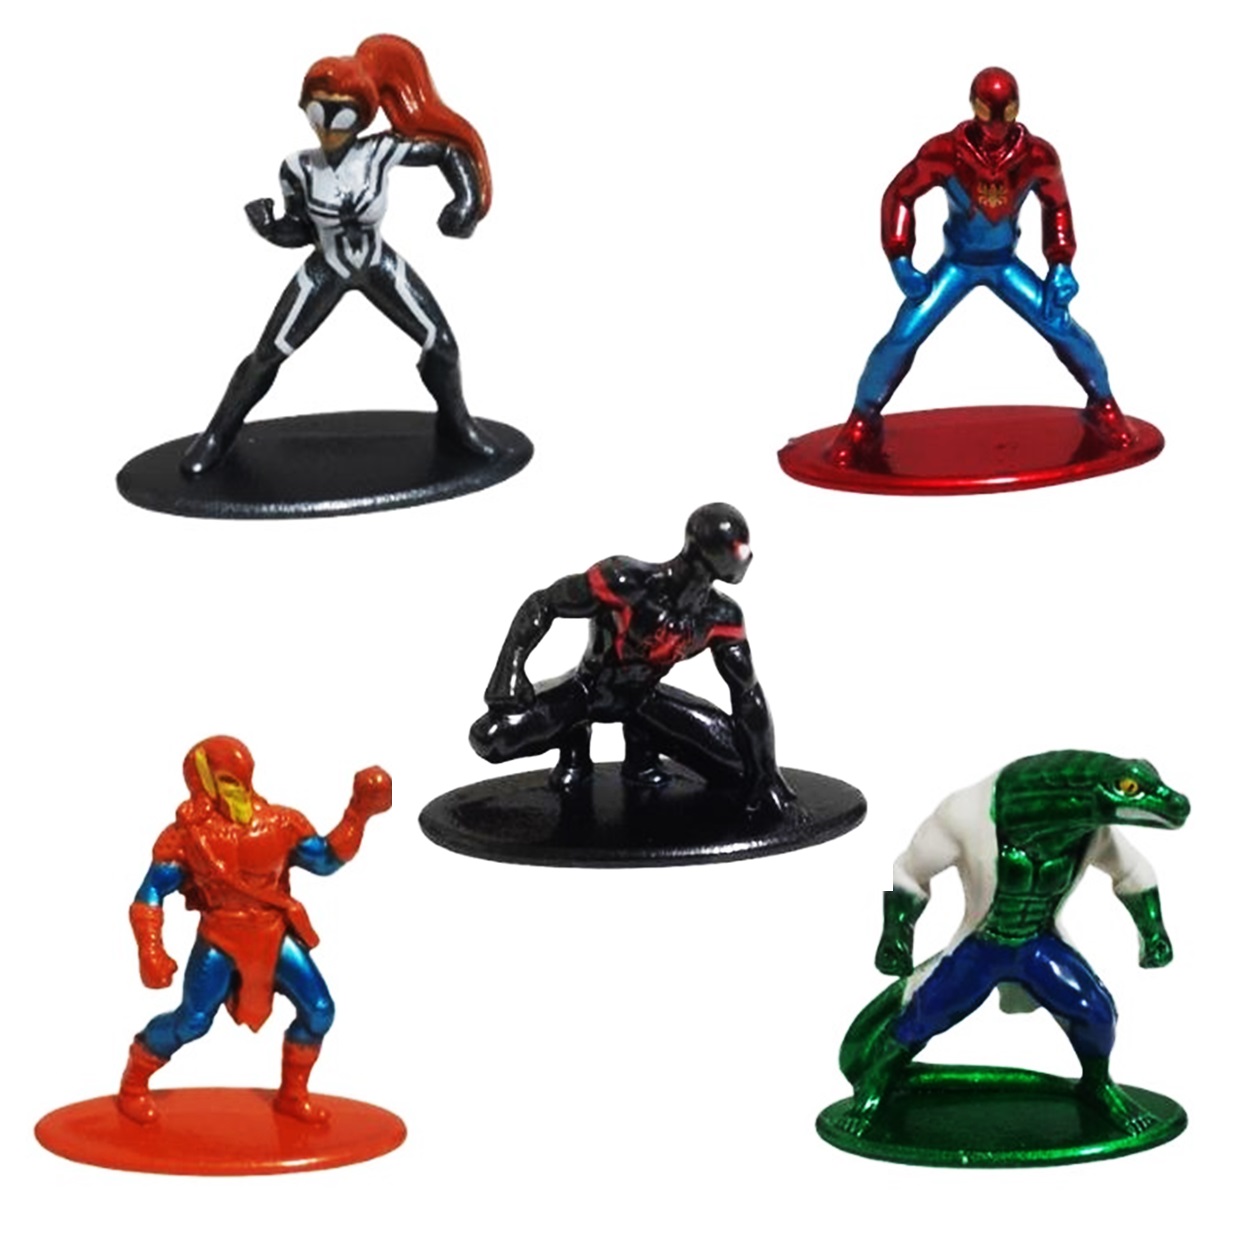 Nano Metalsfigs Spider Man 5pzs Pack Jada Toys Lizard